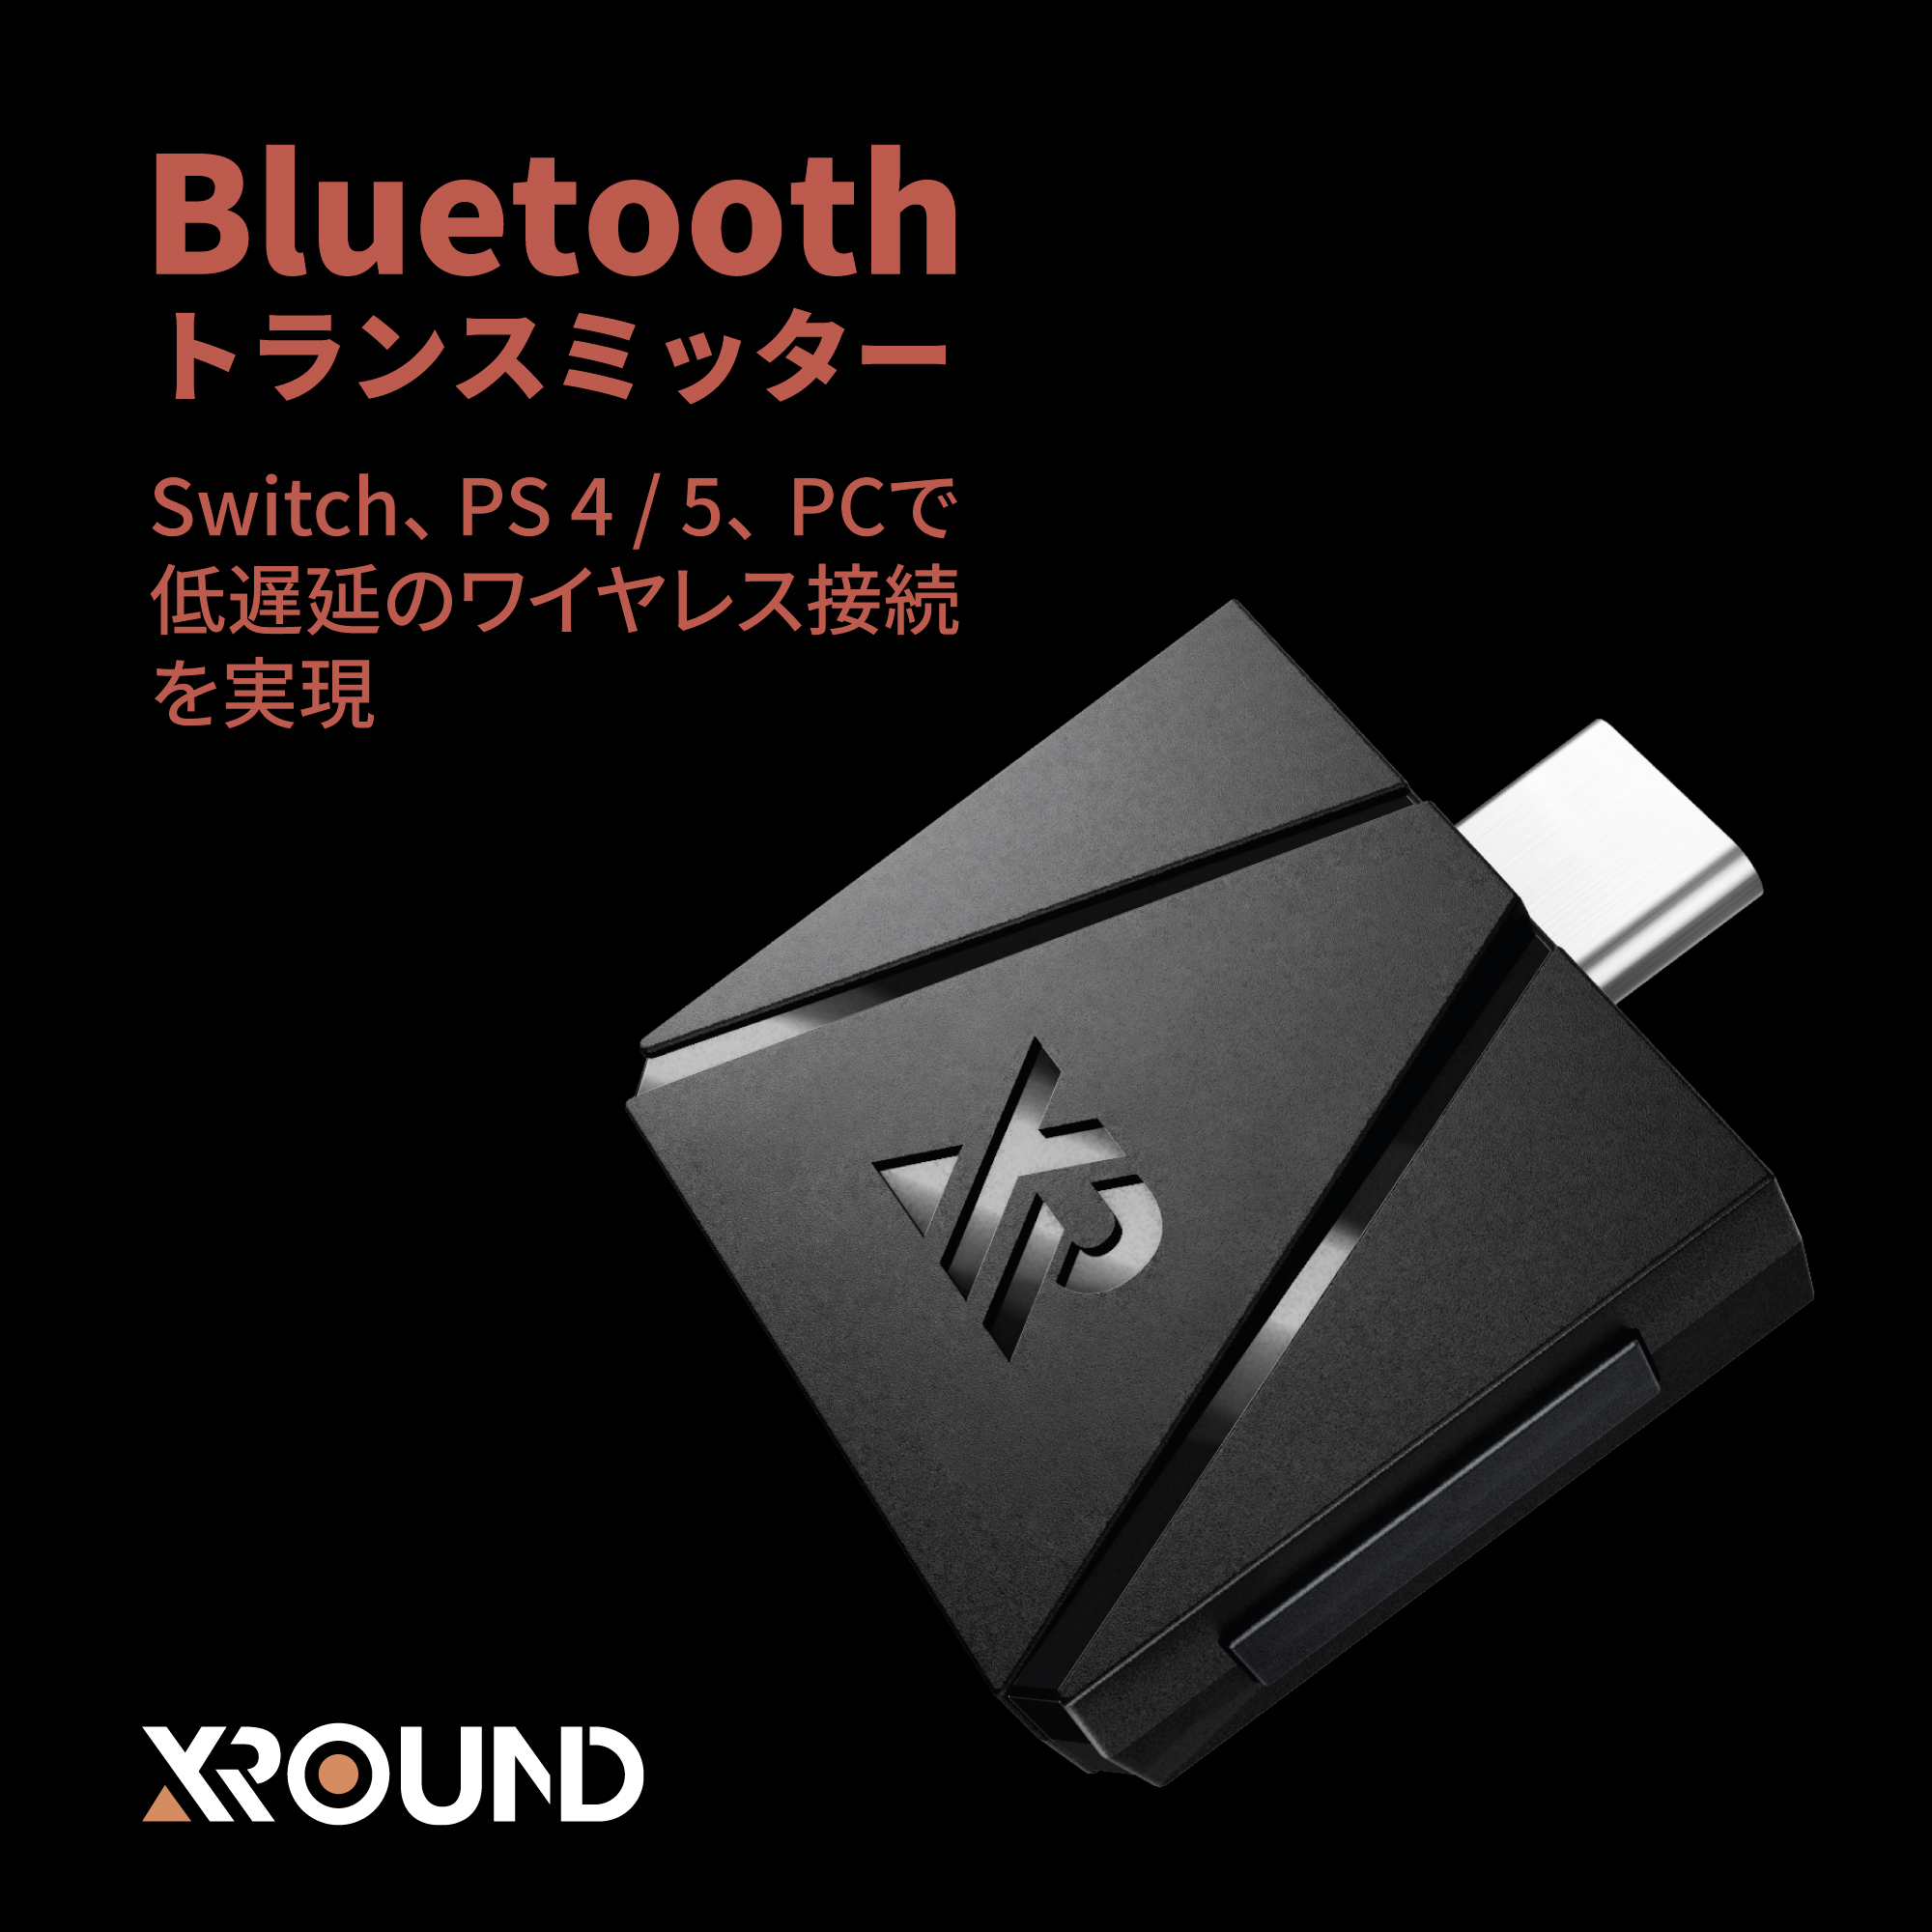 Bluetoothトランスミッター - 株式会社アーキサイト